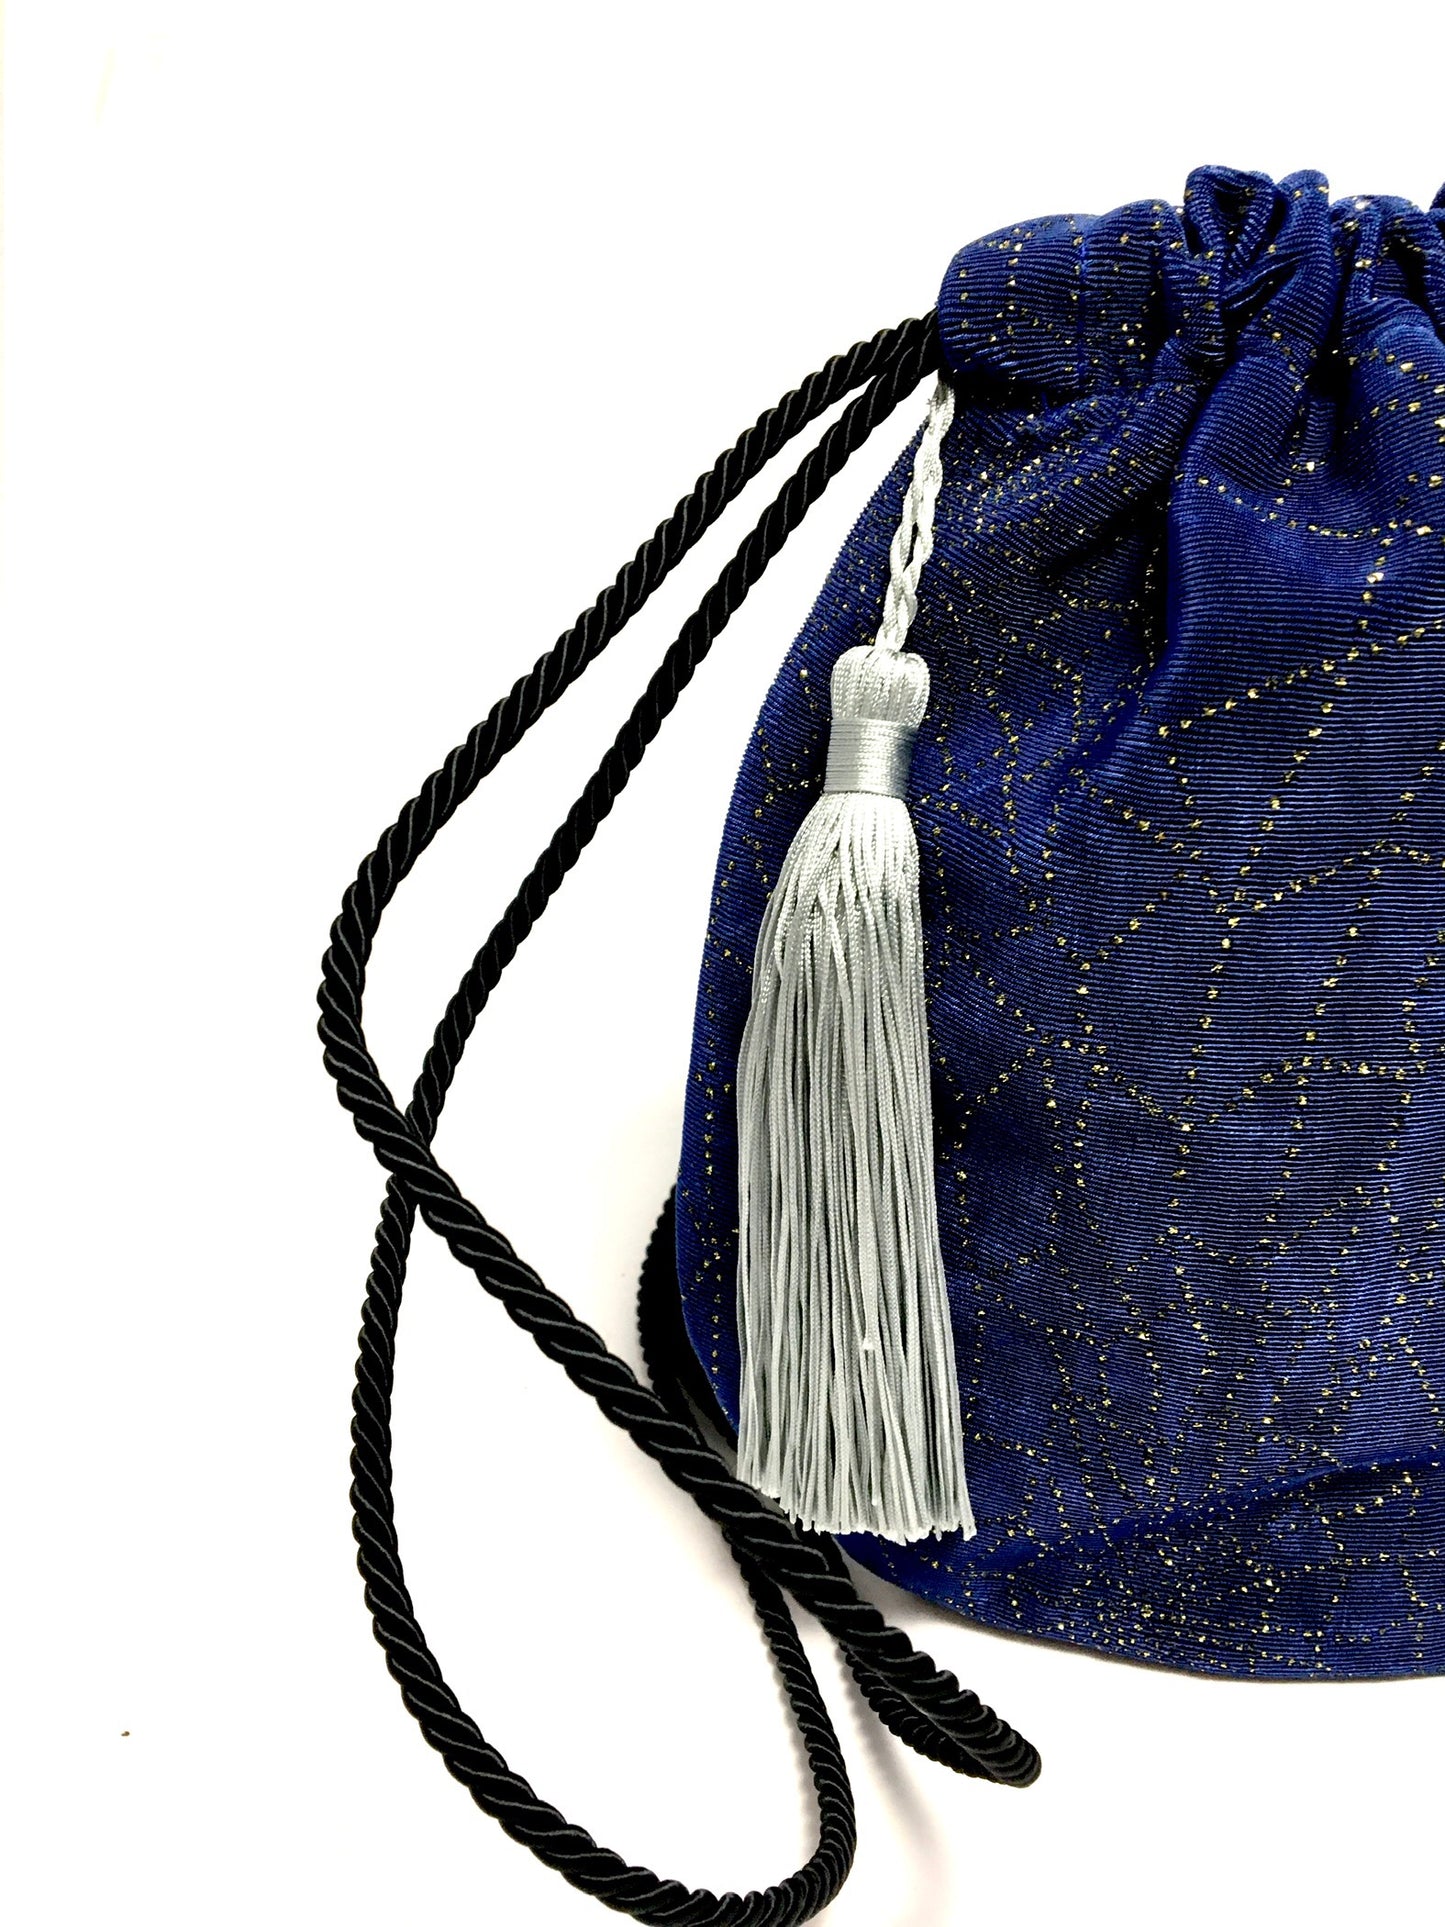 Blue bag with tassel